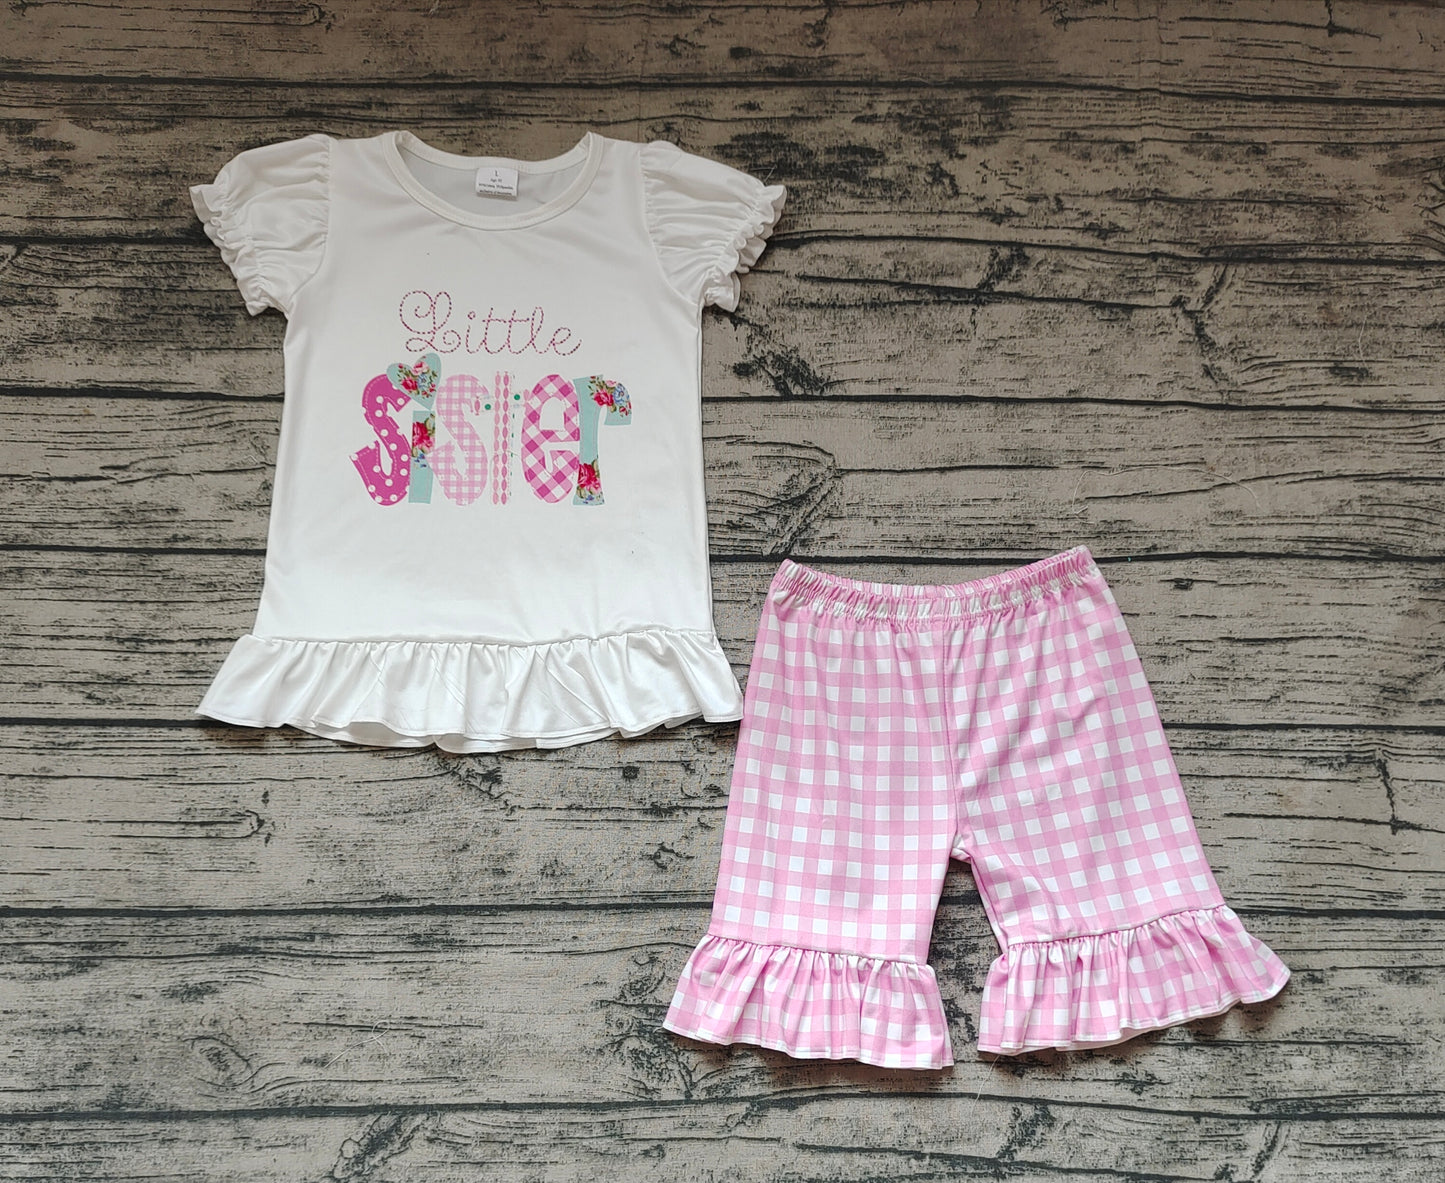 Baby Girls Little Sister Shirts Ruffle Shorts Clothes Sets